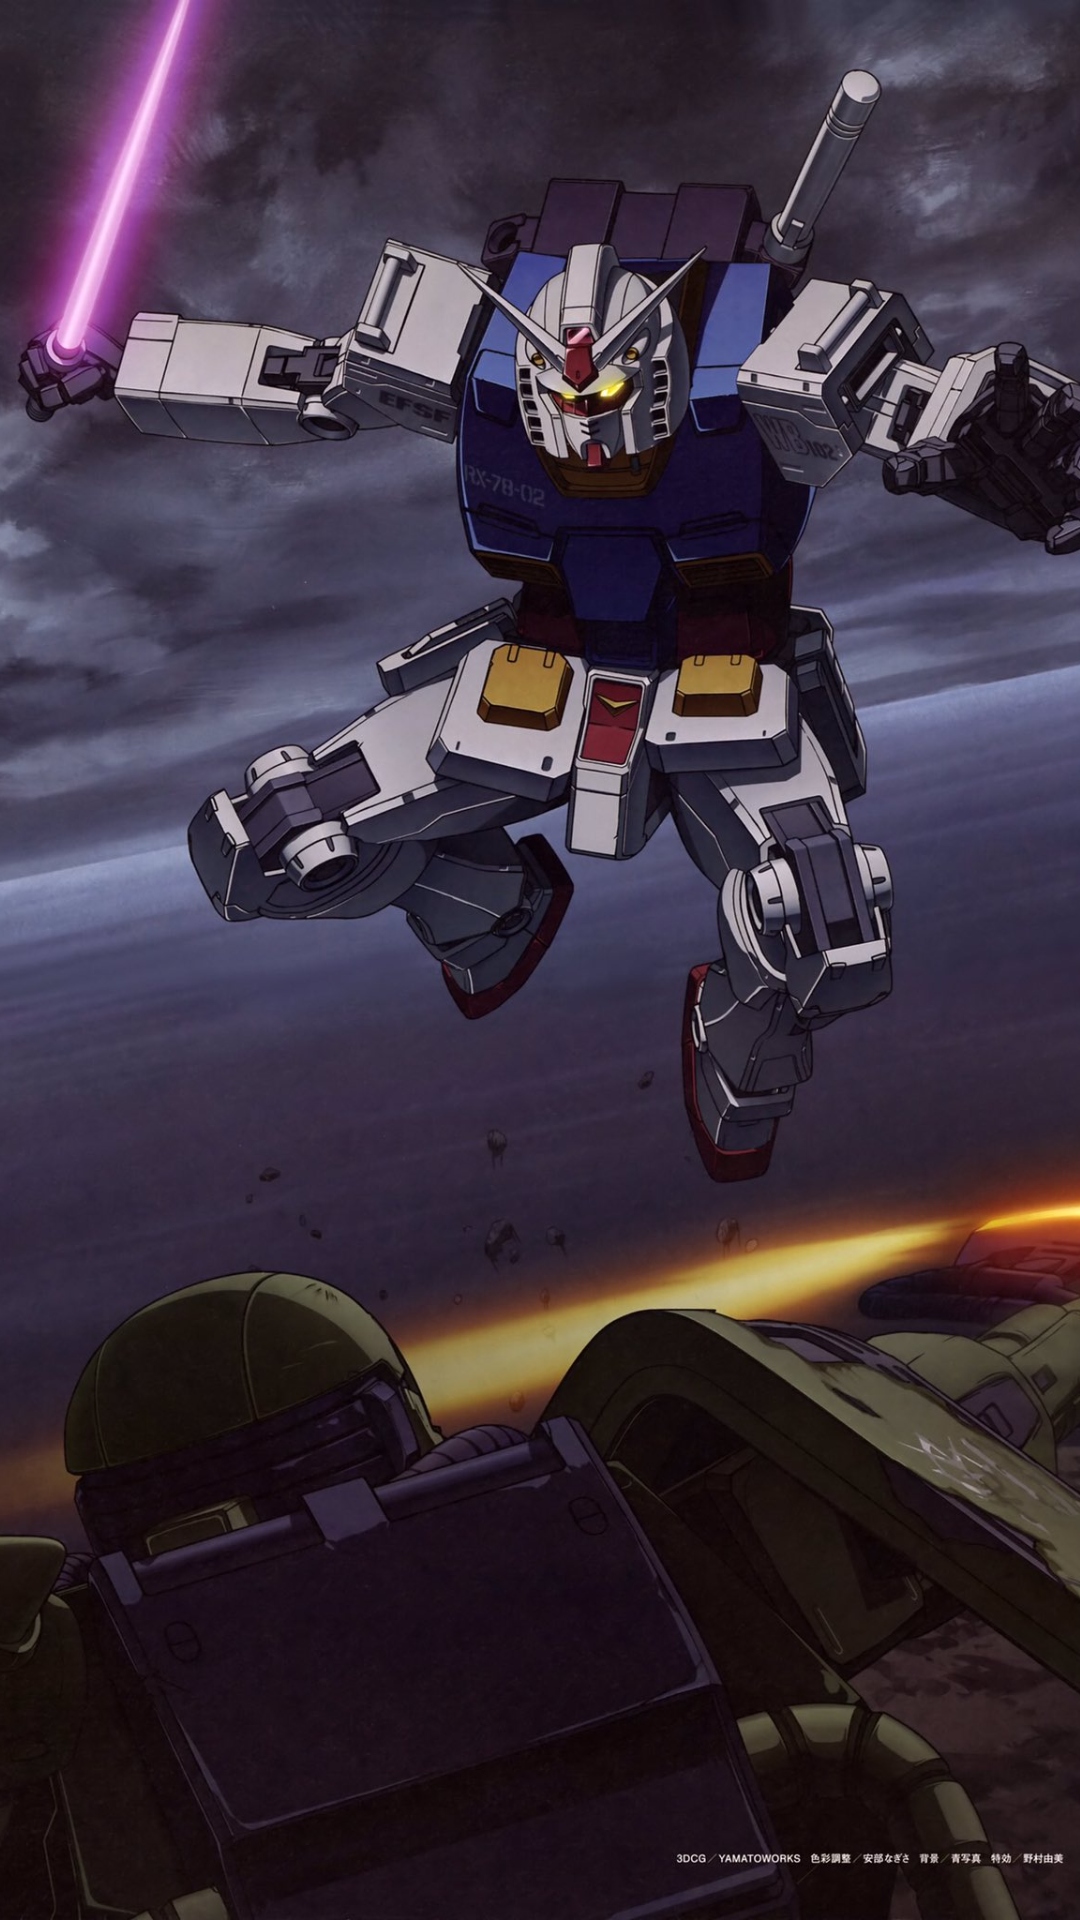 Gundam Wallpaper Images